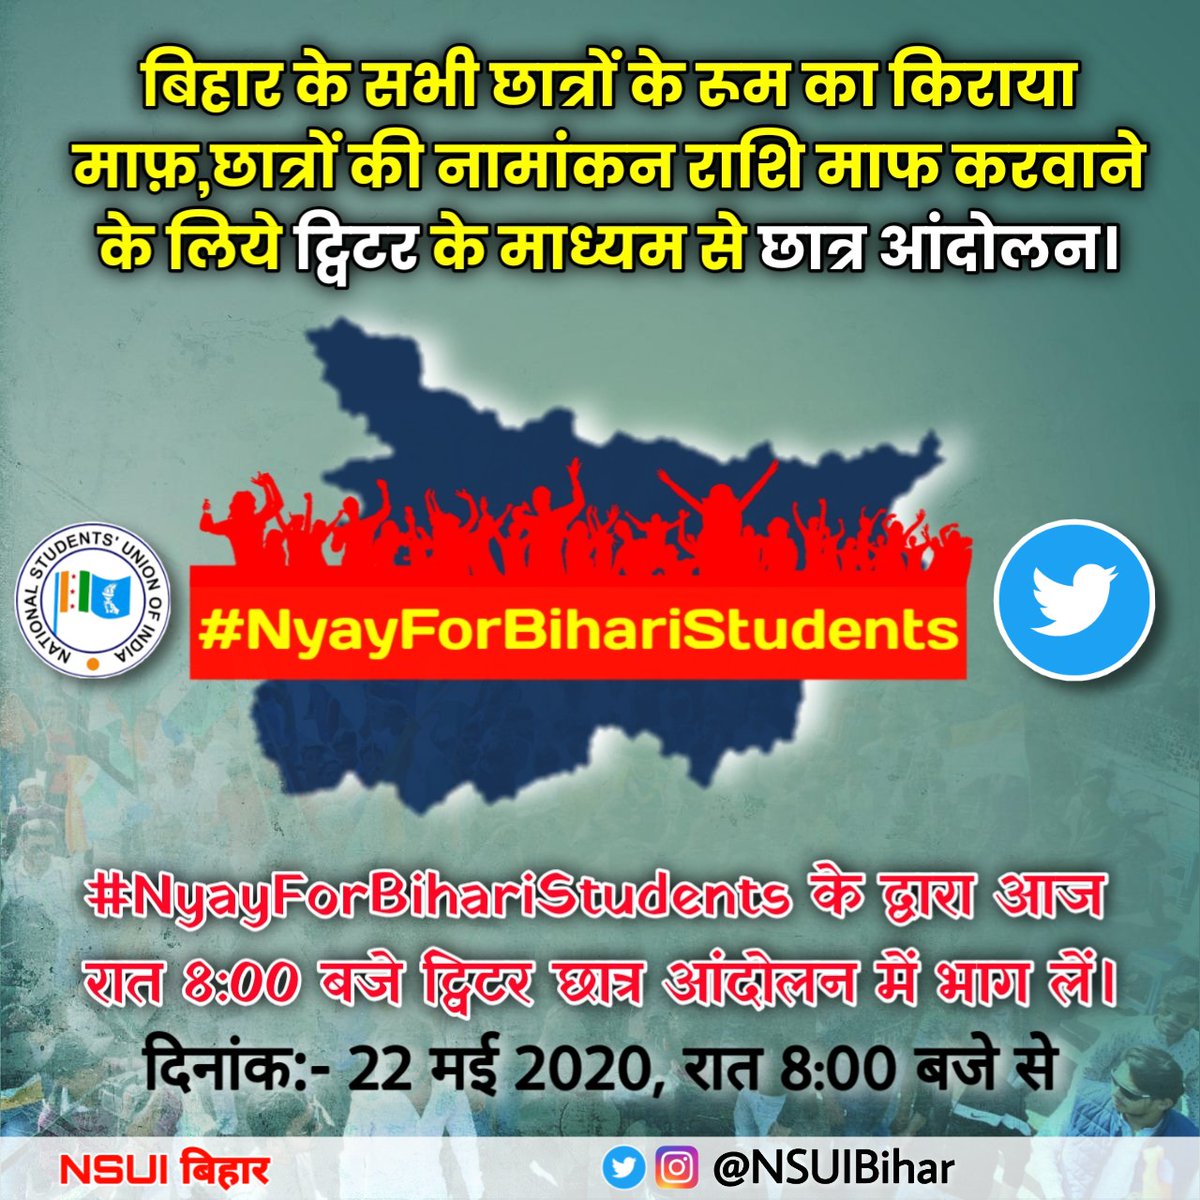 आज रात 8 बजे #NyayForBihariStudents पर ट्वीट कर छात्रों की आवाज बुलंद करें। 
@NSUIBihar @zhanitish @advocatejhkhan @Tribhuwan_NSUI @AsjadShanu @Raghav_Nsui @SunnySinghNSUI @PinkuGiri7